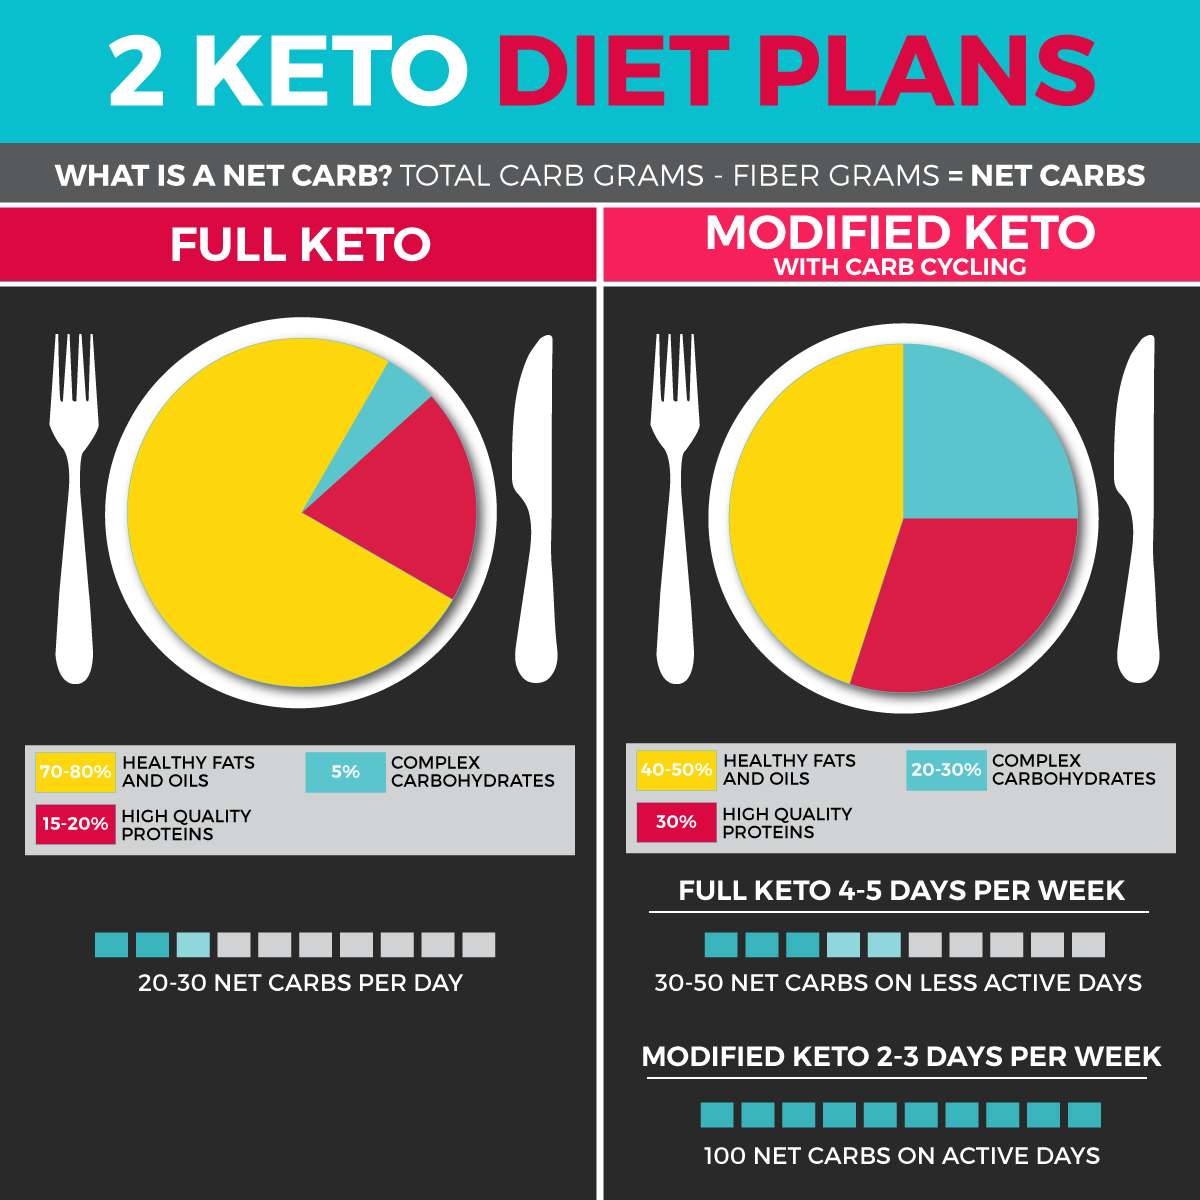 2 Keto Diet Plans